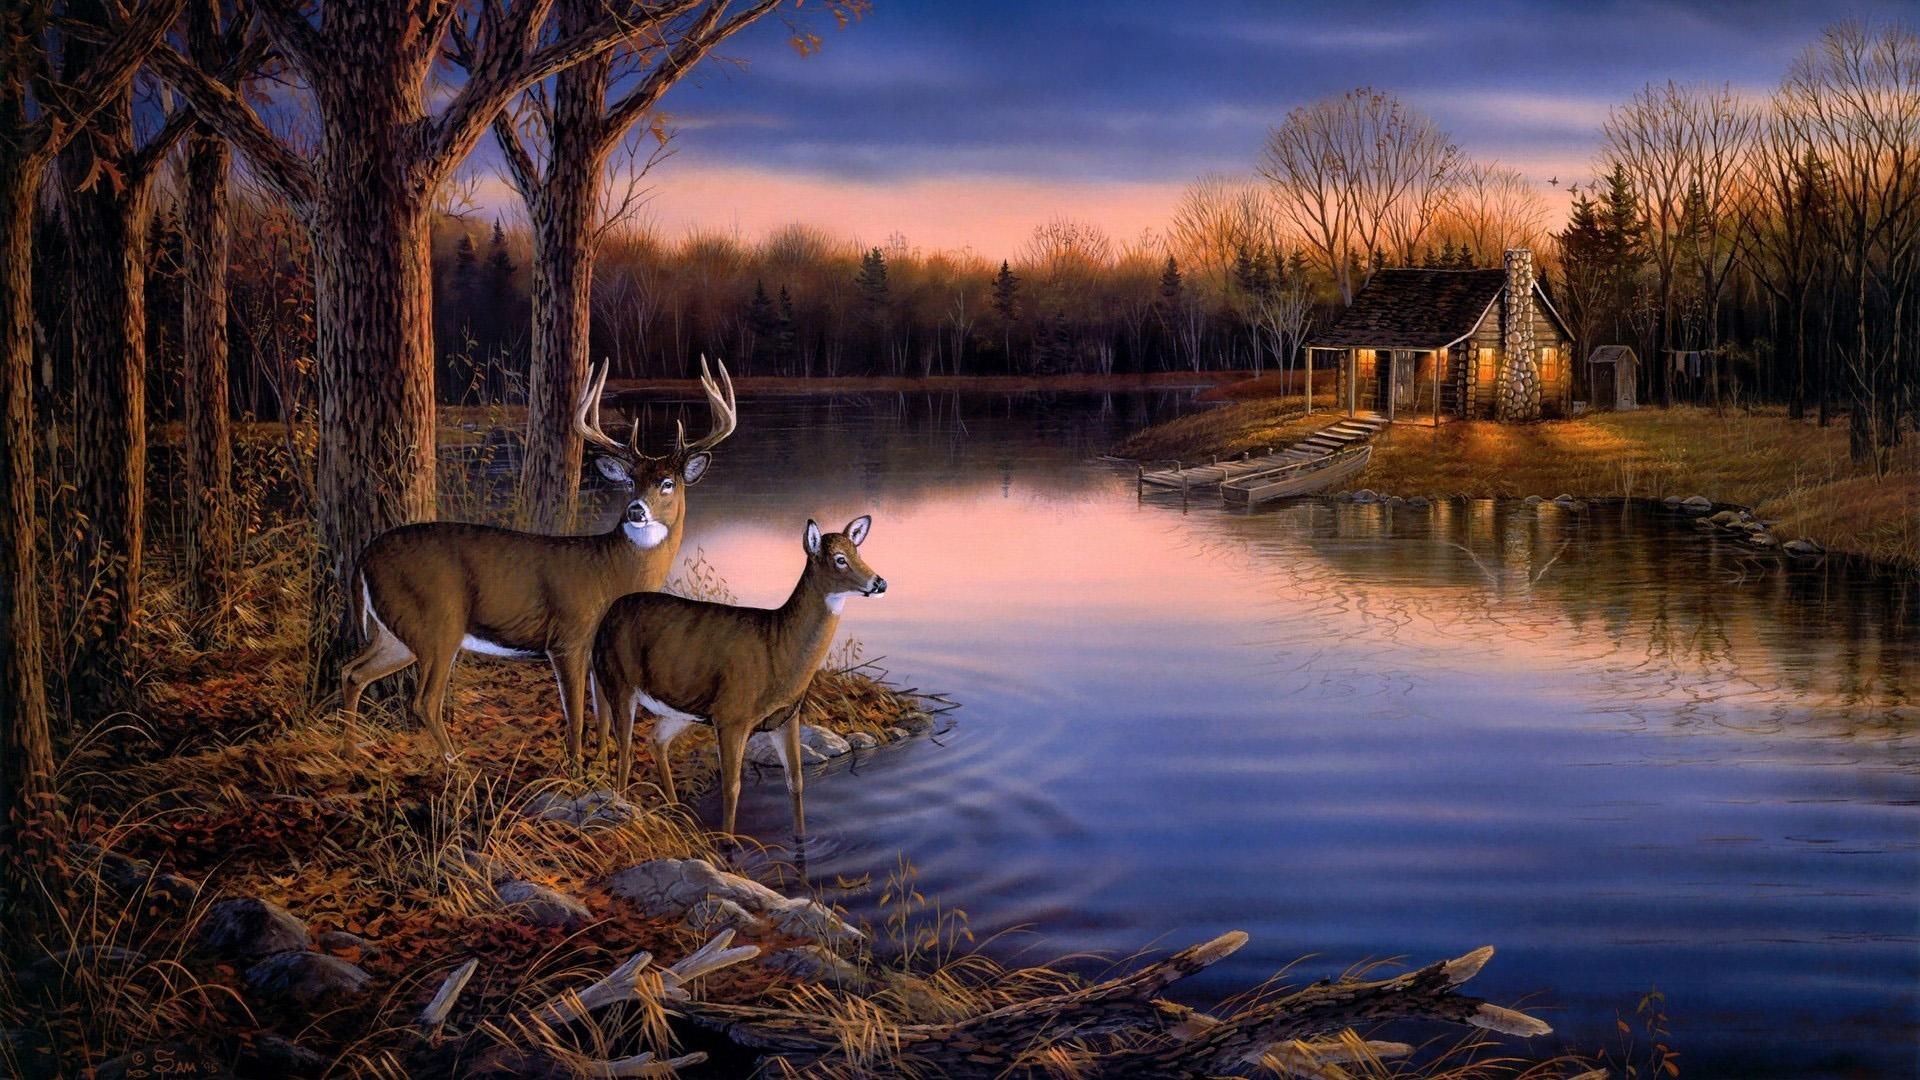 1920x1080 Deer Hunting Wallpaper Border | ... ,landscape wallpaper Picture   1080p hd wallpaper-